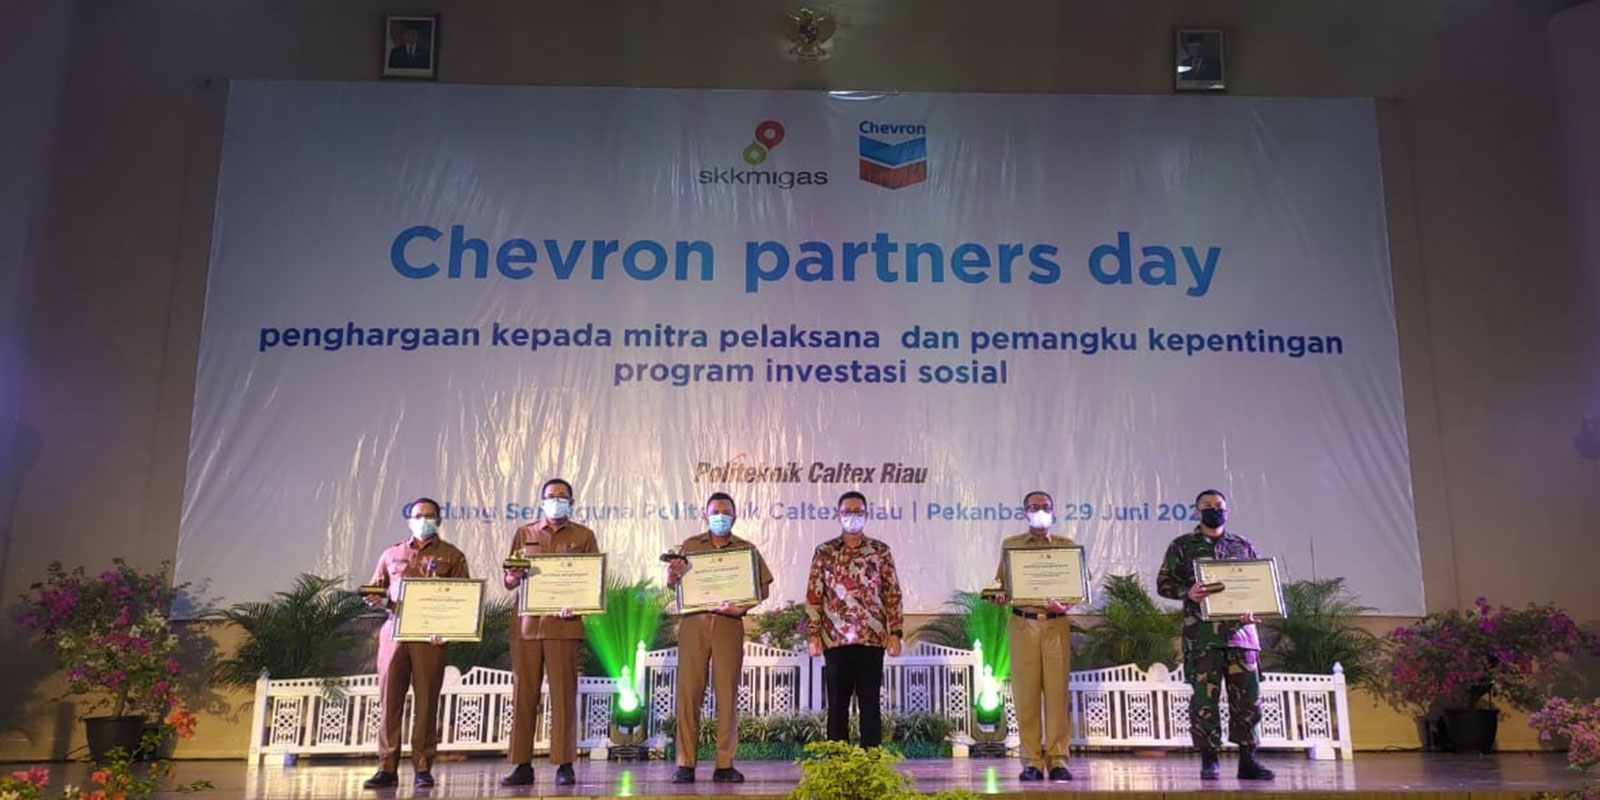 Chevron Partners Day event photo